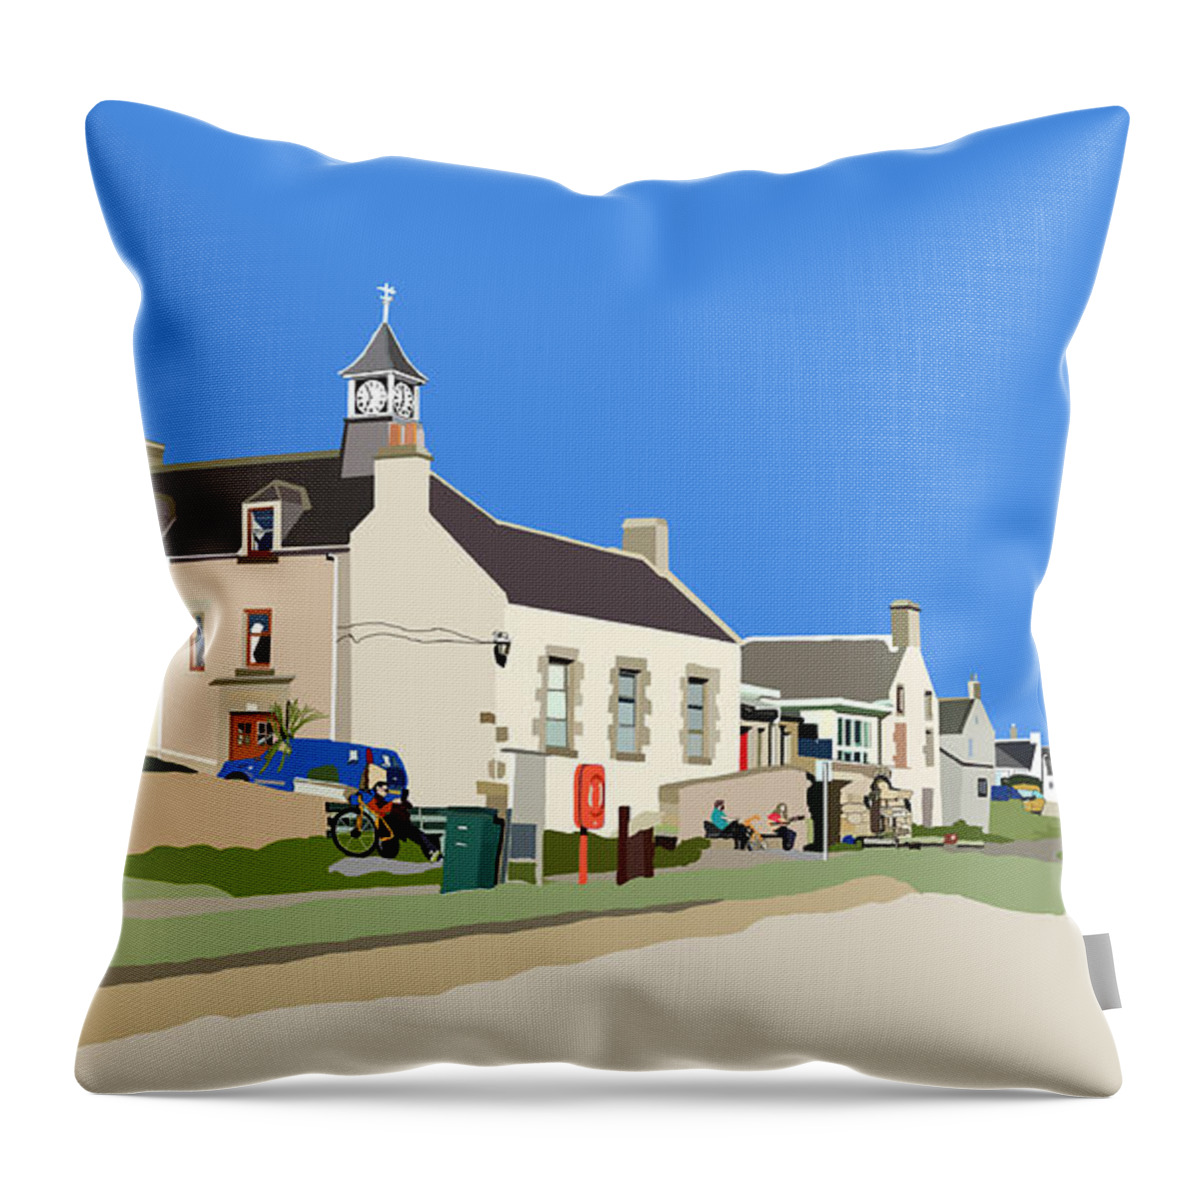 Findhorn Throw Pillow featuring the digital art Findhorn by John Mckenzie